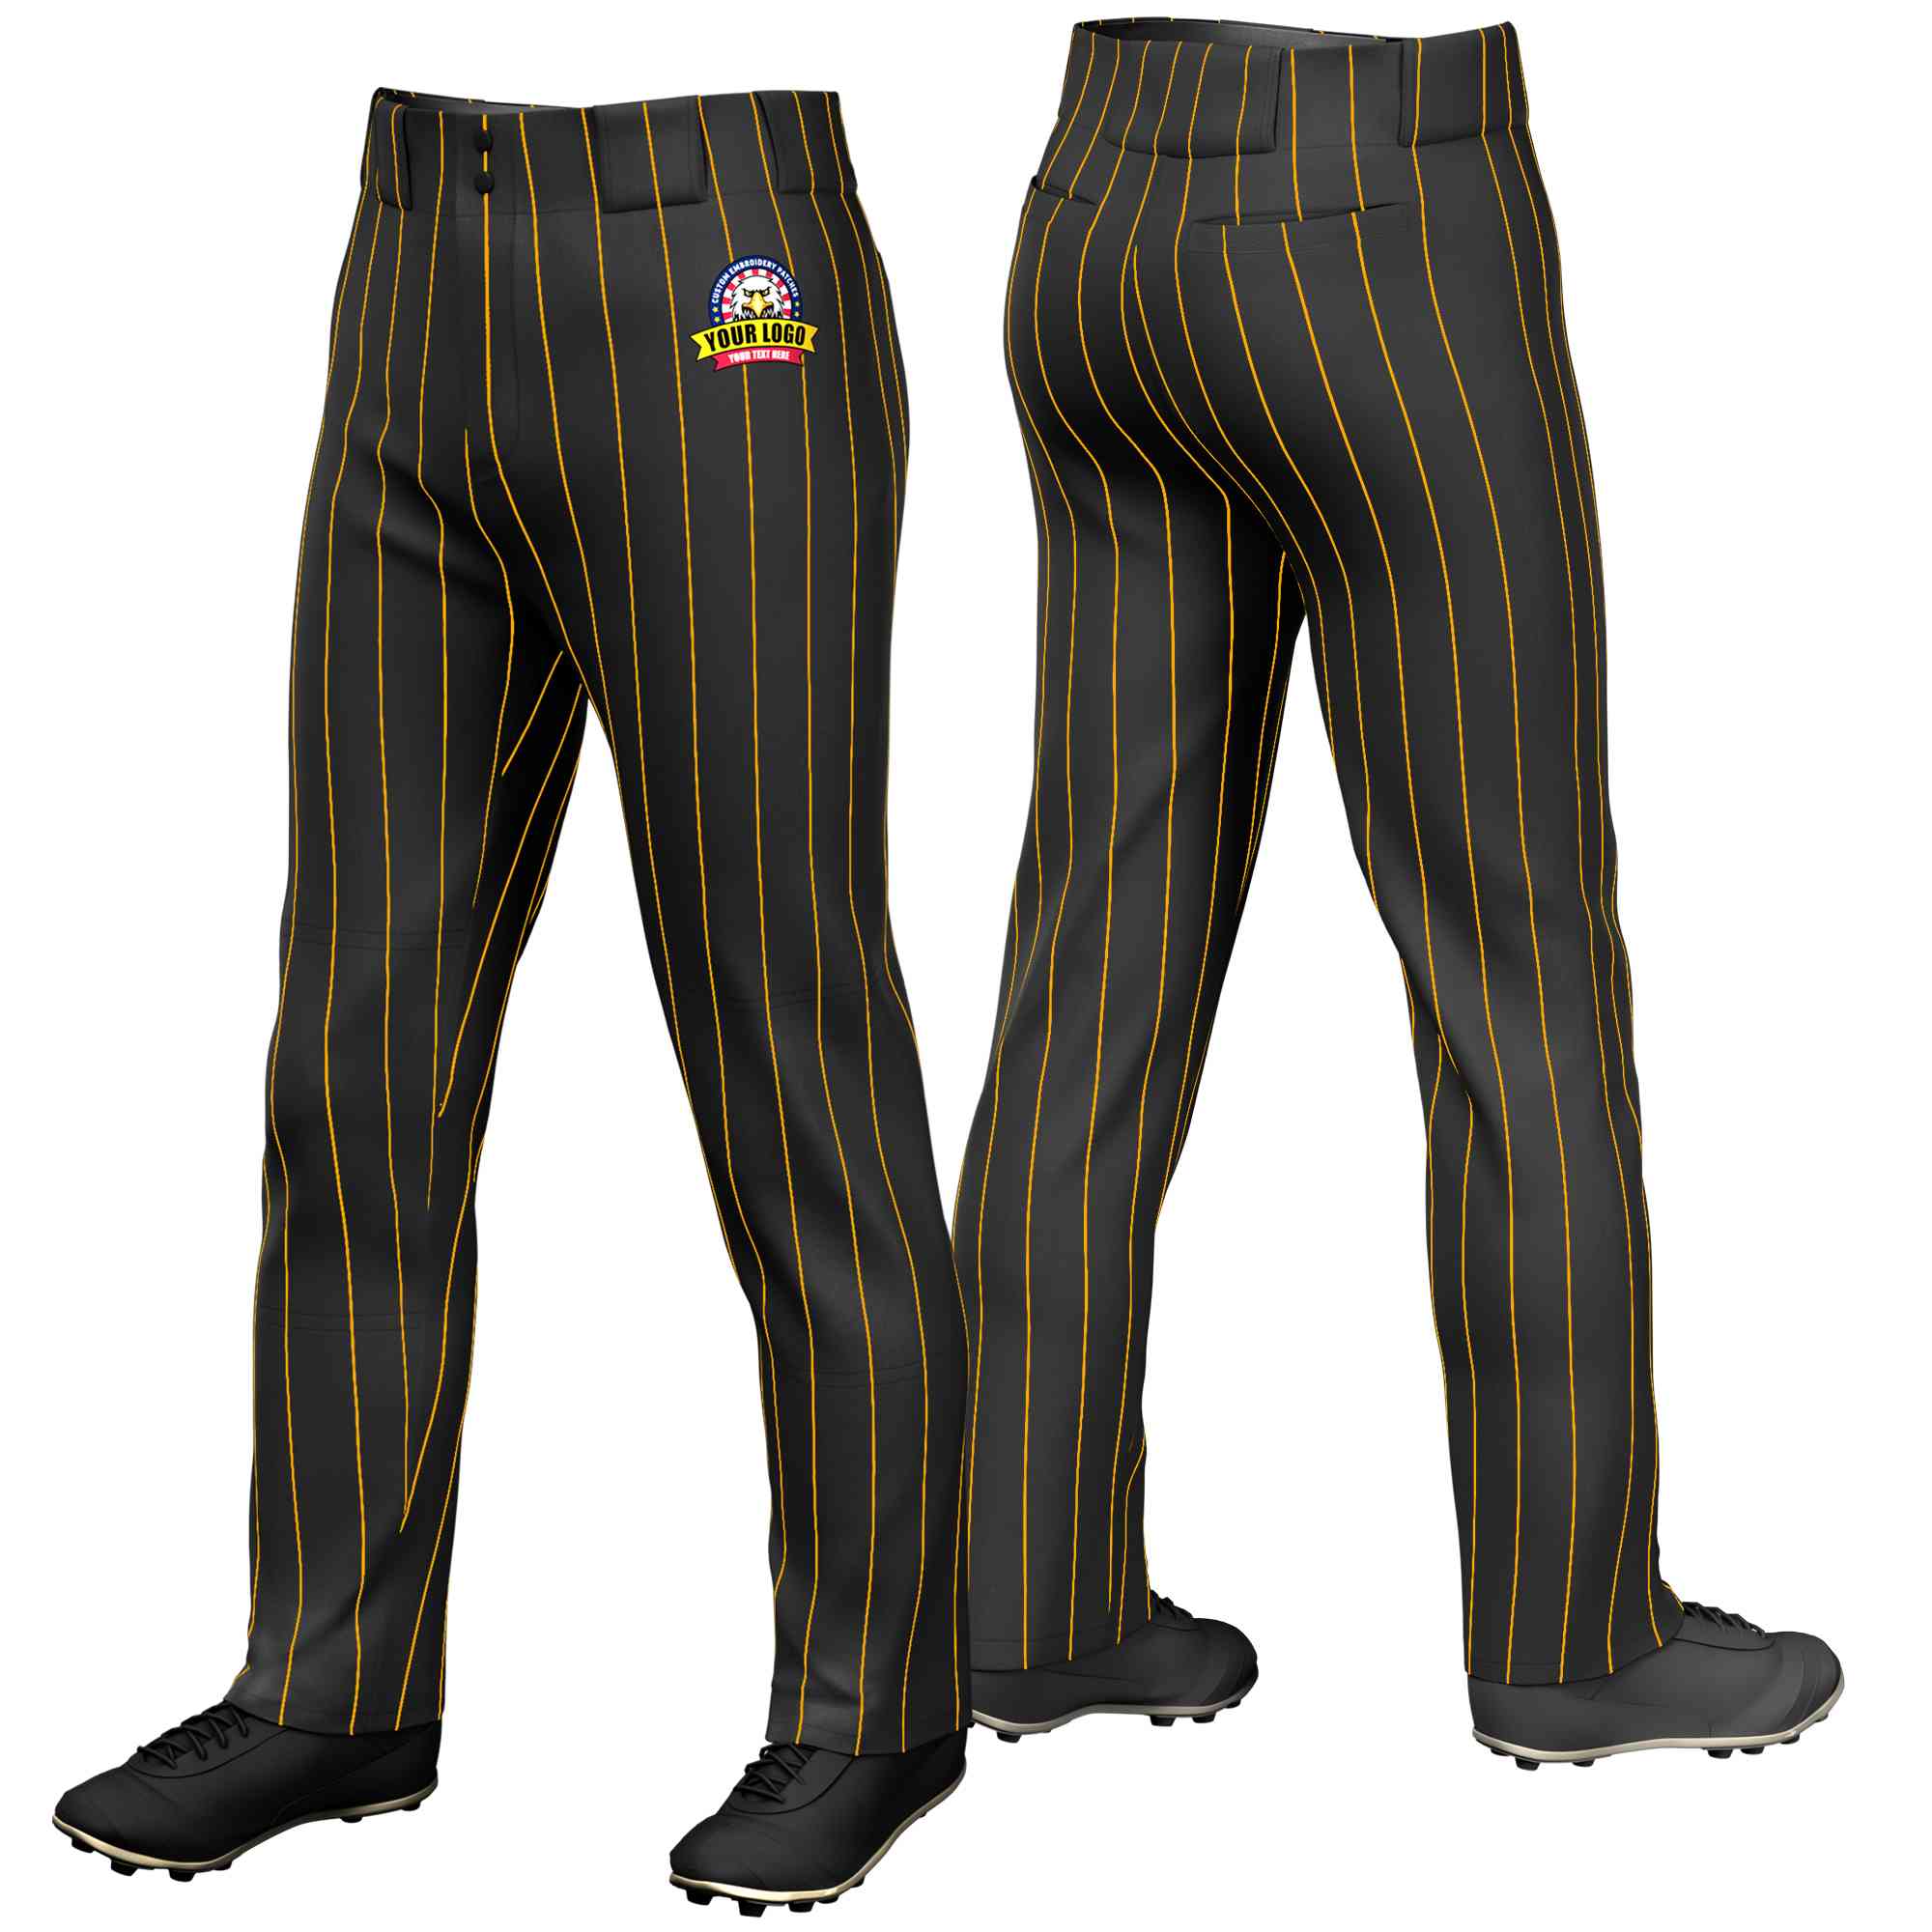 Black Baseball Pants With White Pinstripes